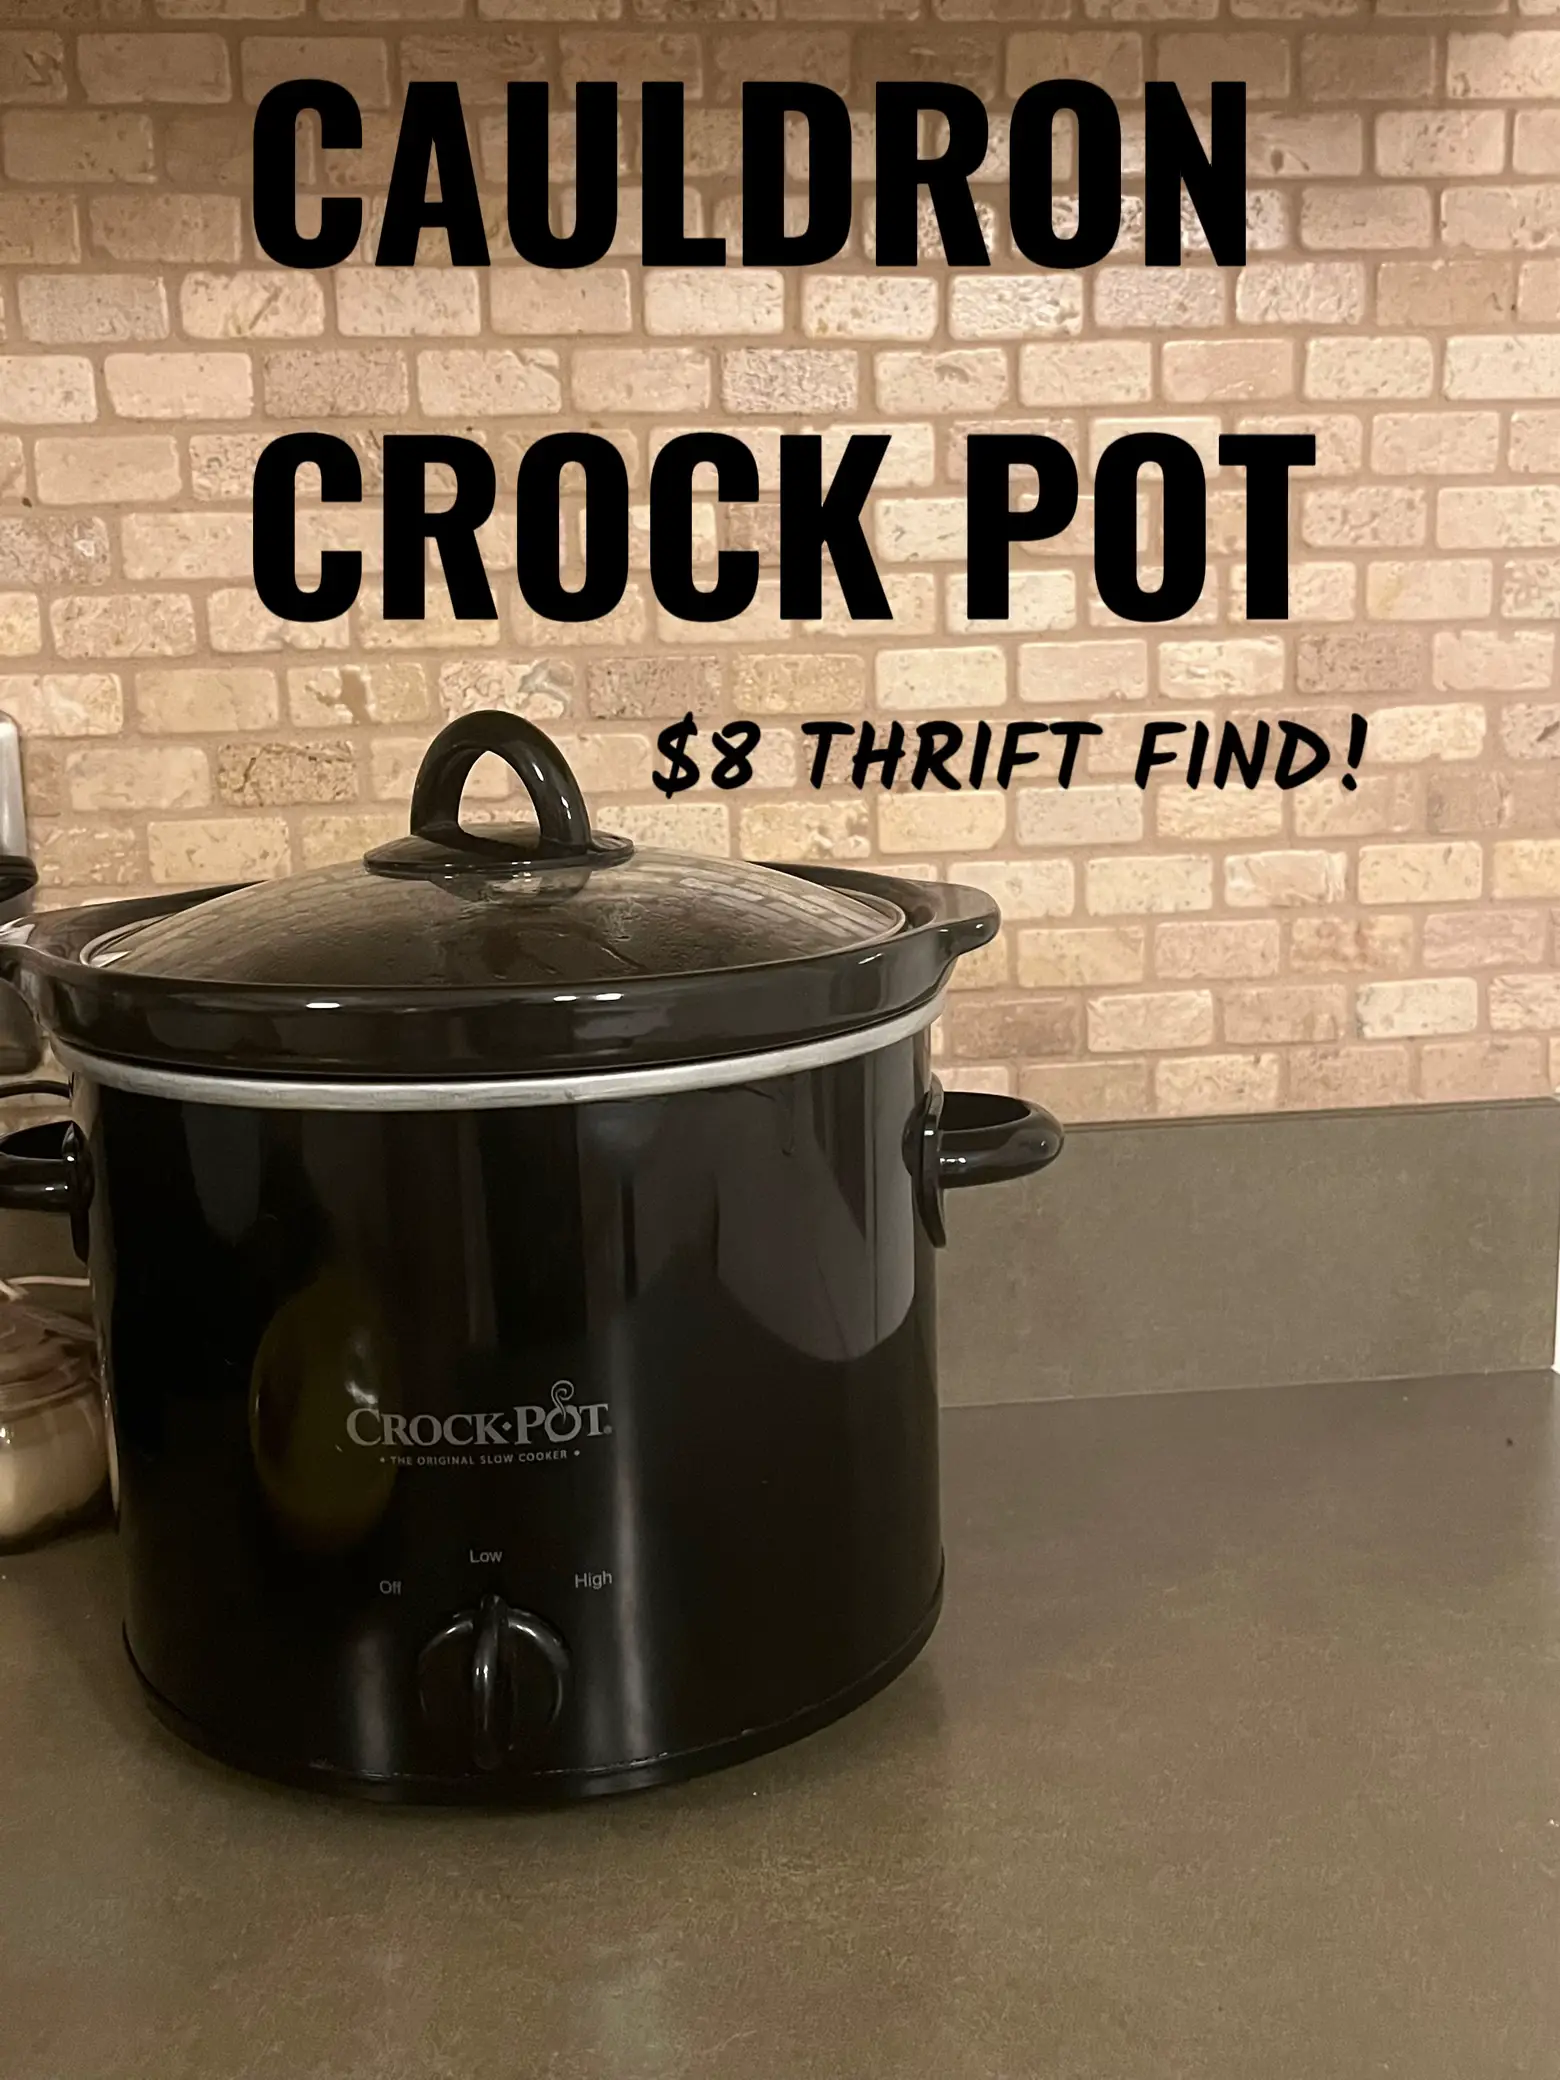 Crock-pot 2 Quart Round Manual Slow Cooker - Black